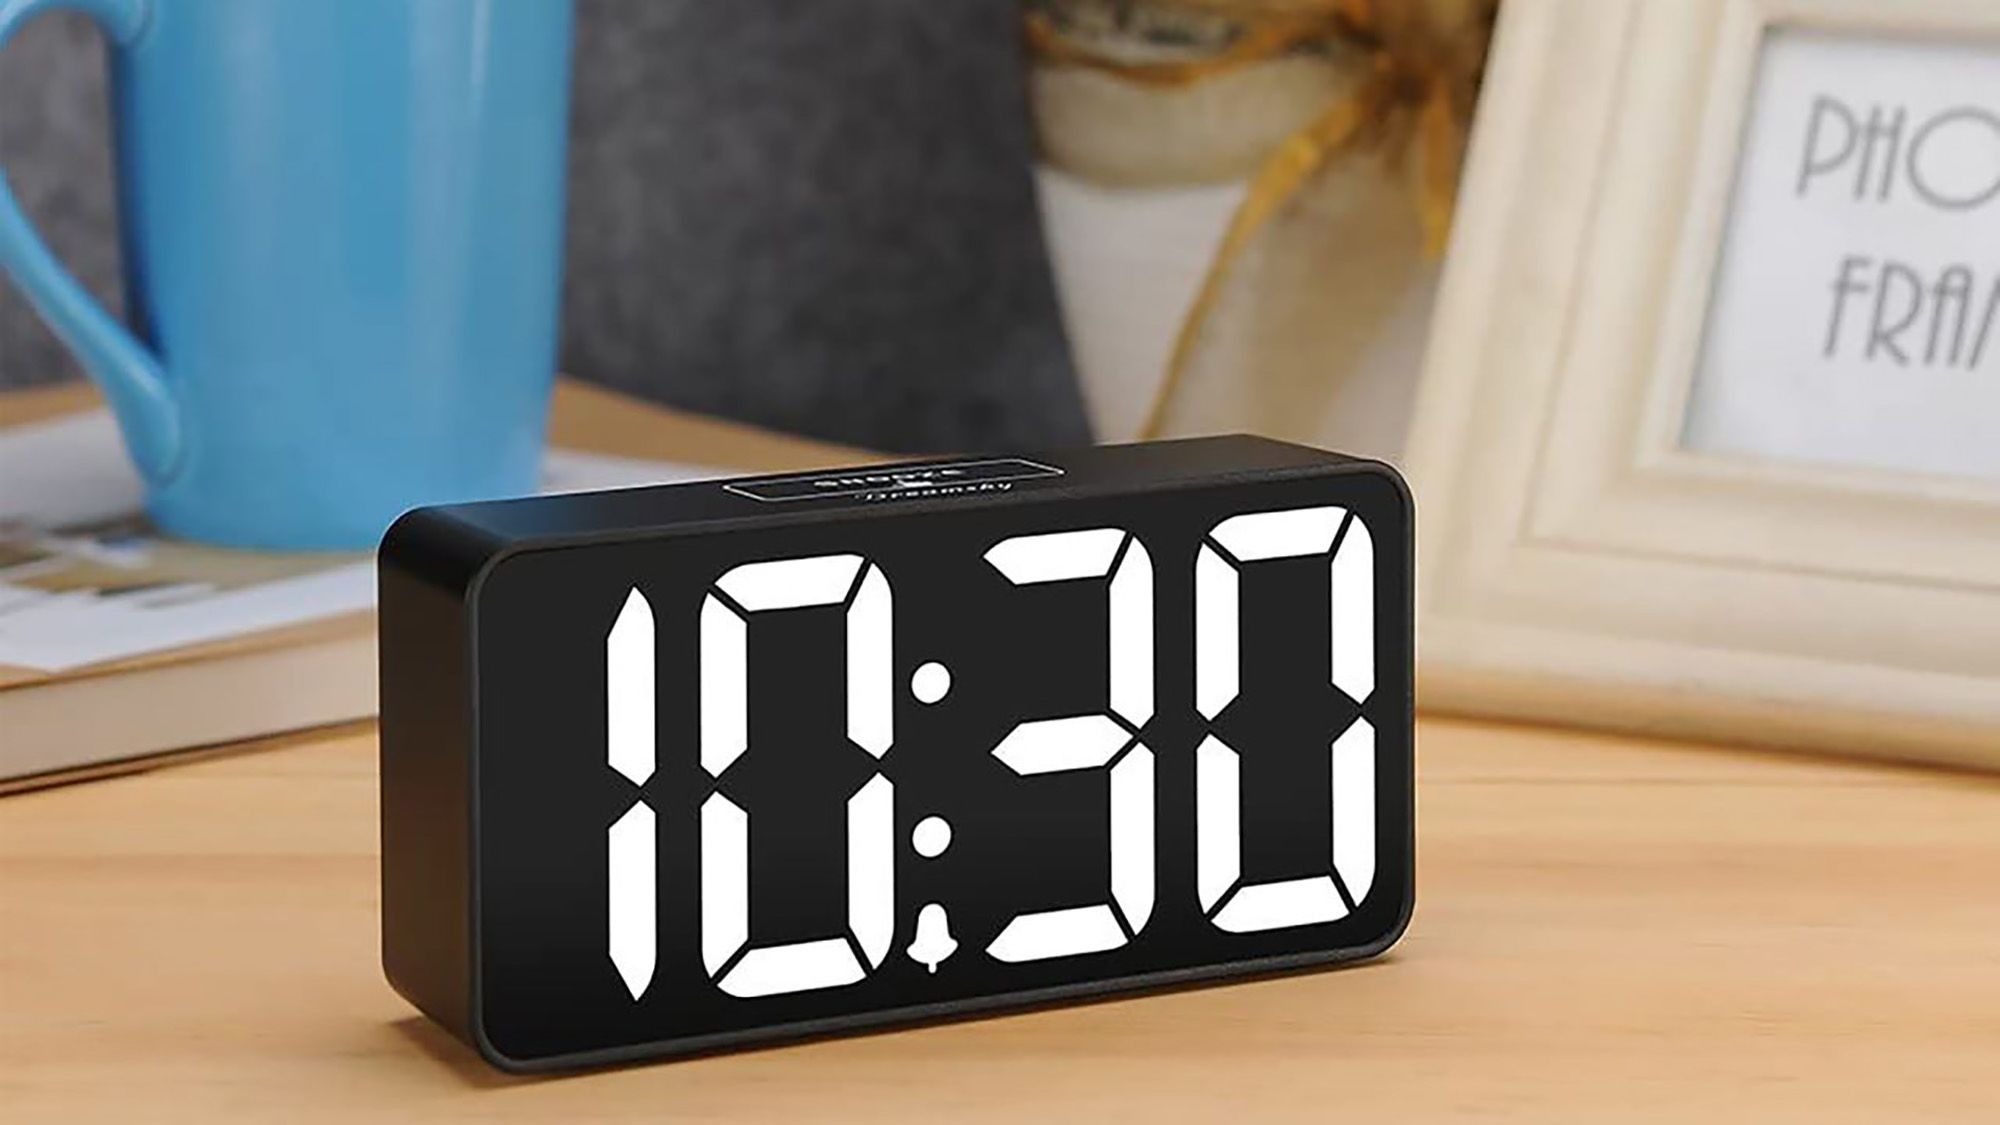 Lighted Digital Clock Custom Accessories 3.5”x1.75”